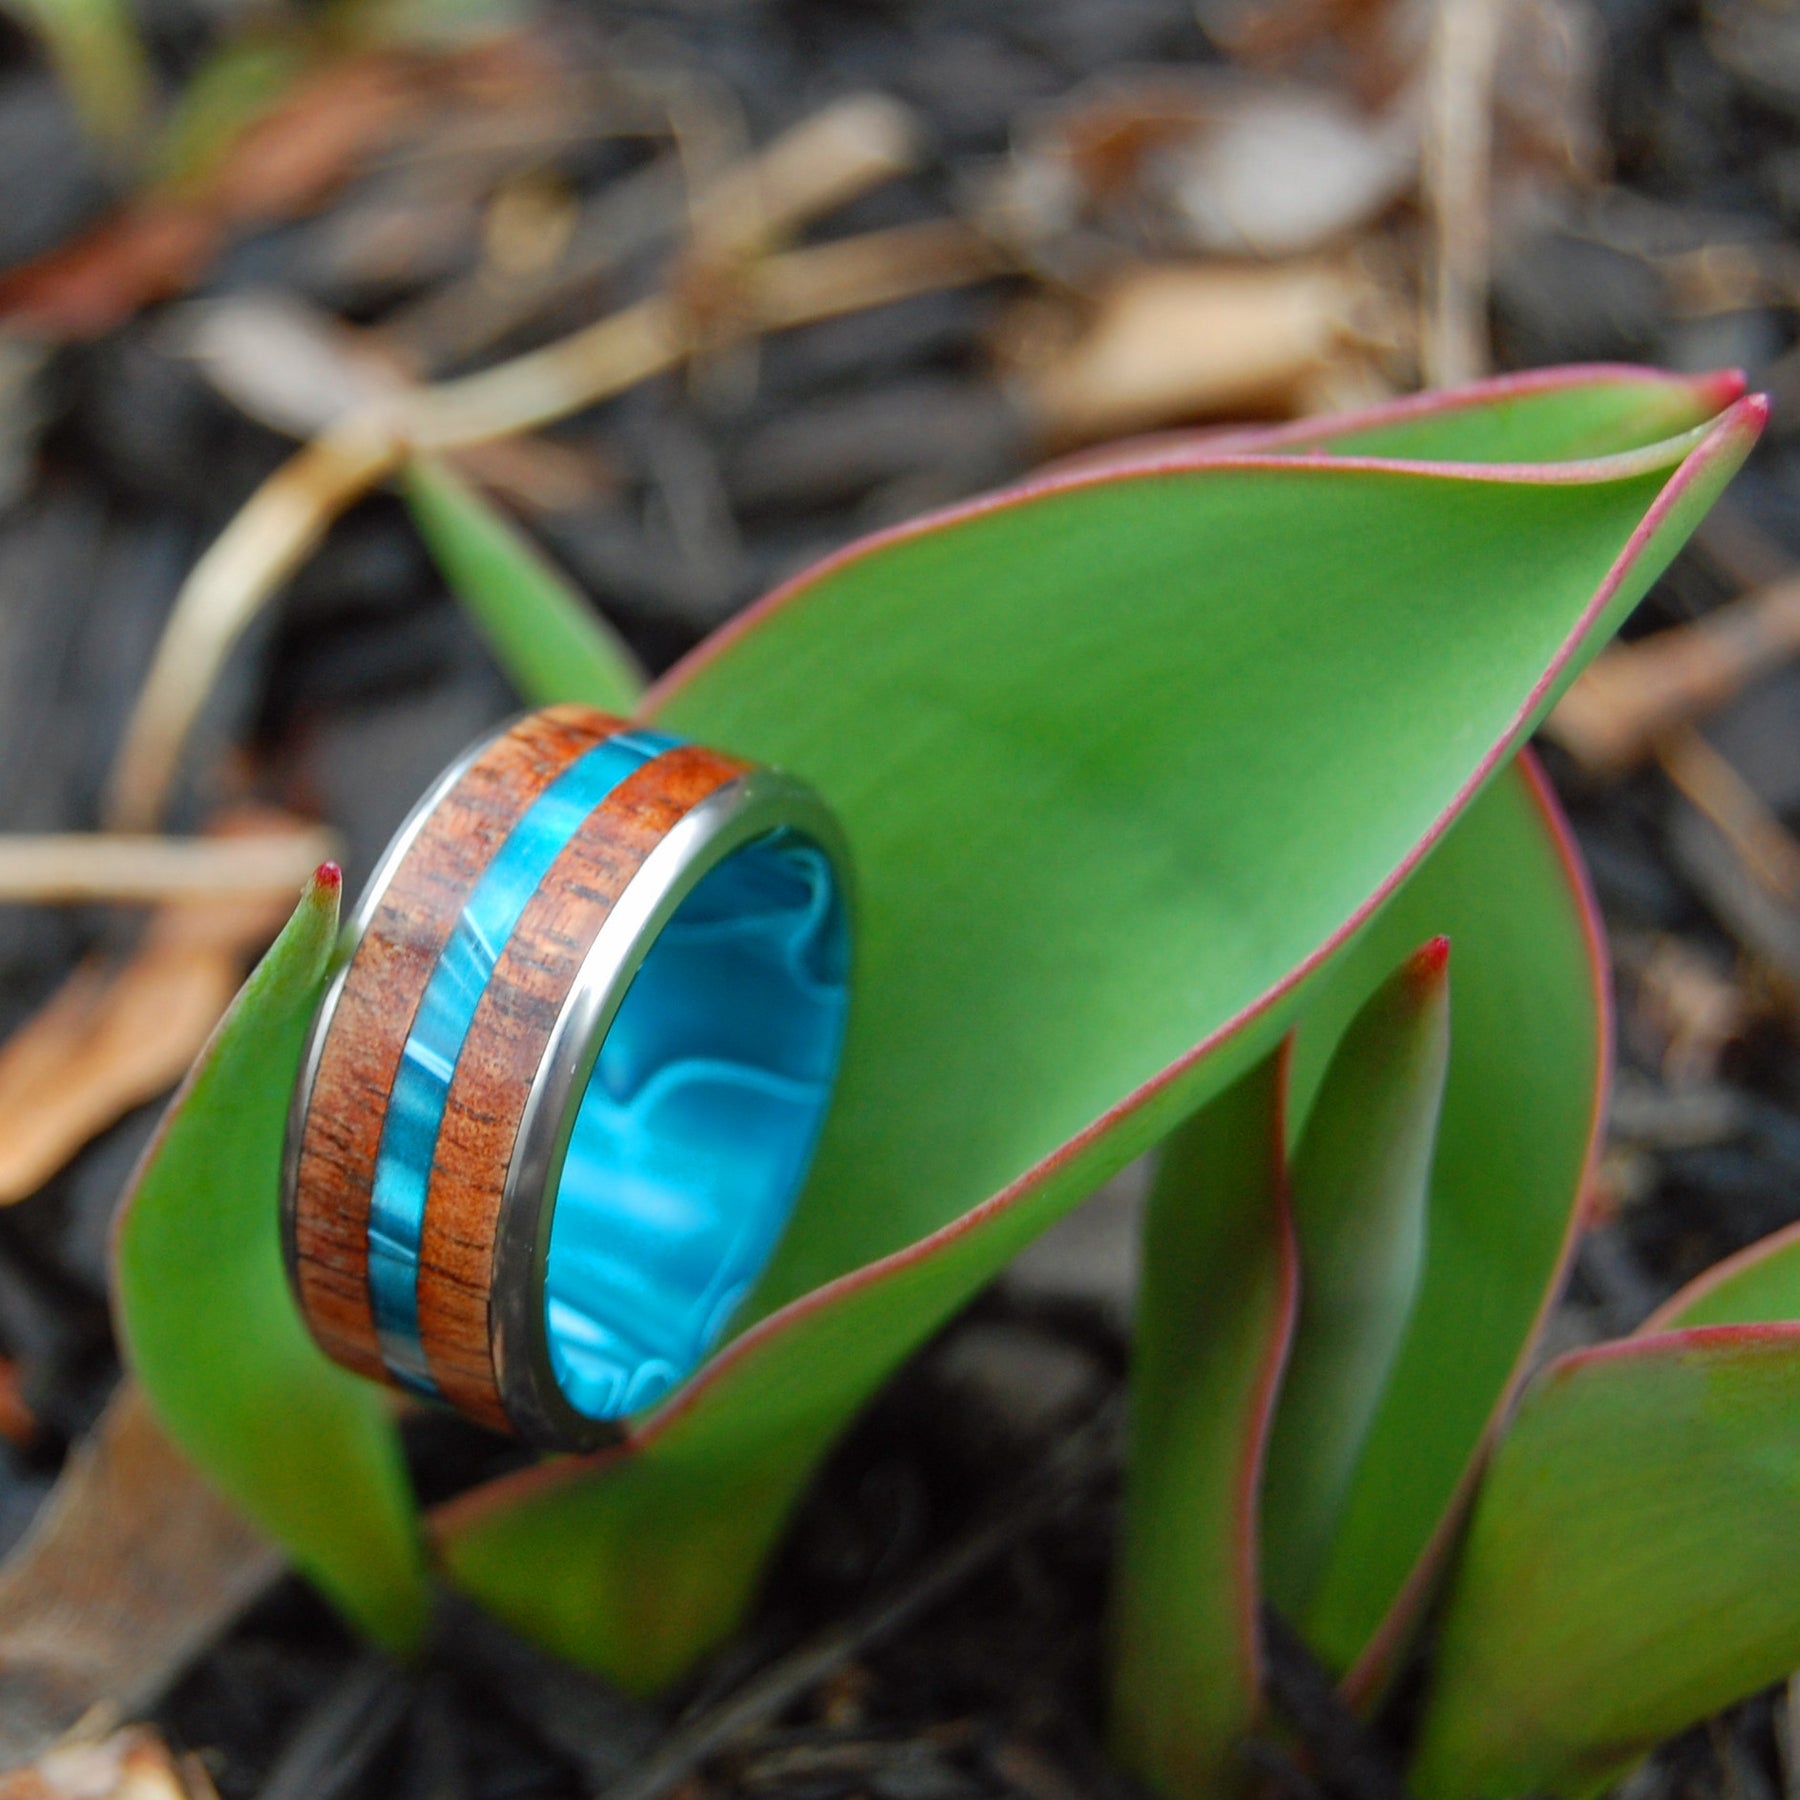 OUTRIGGER | Titanium and Hawaiian Koa Wood Custom Wedding Rings - Minter and Richter Designs